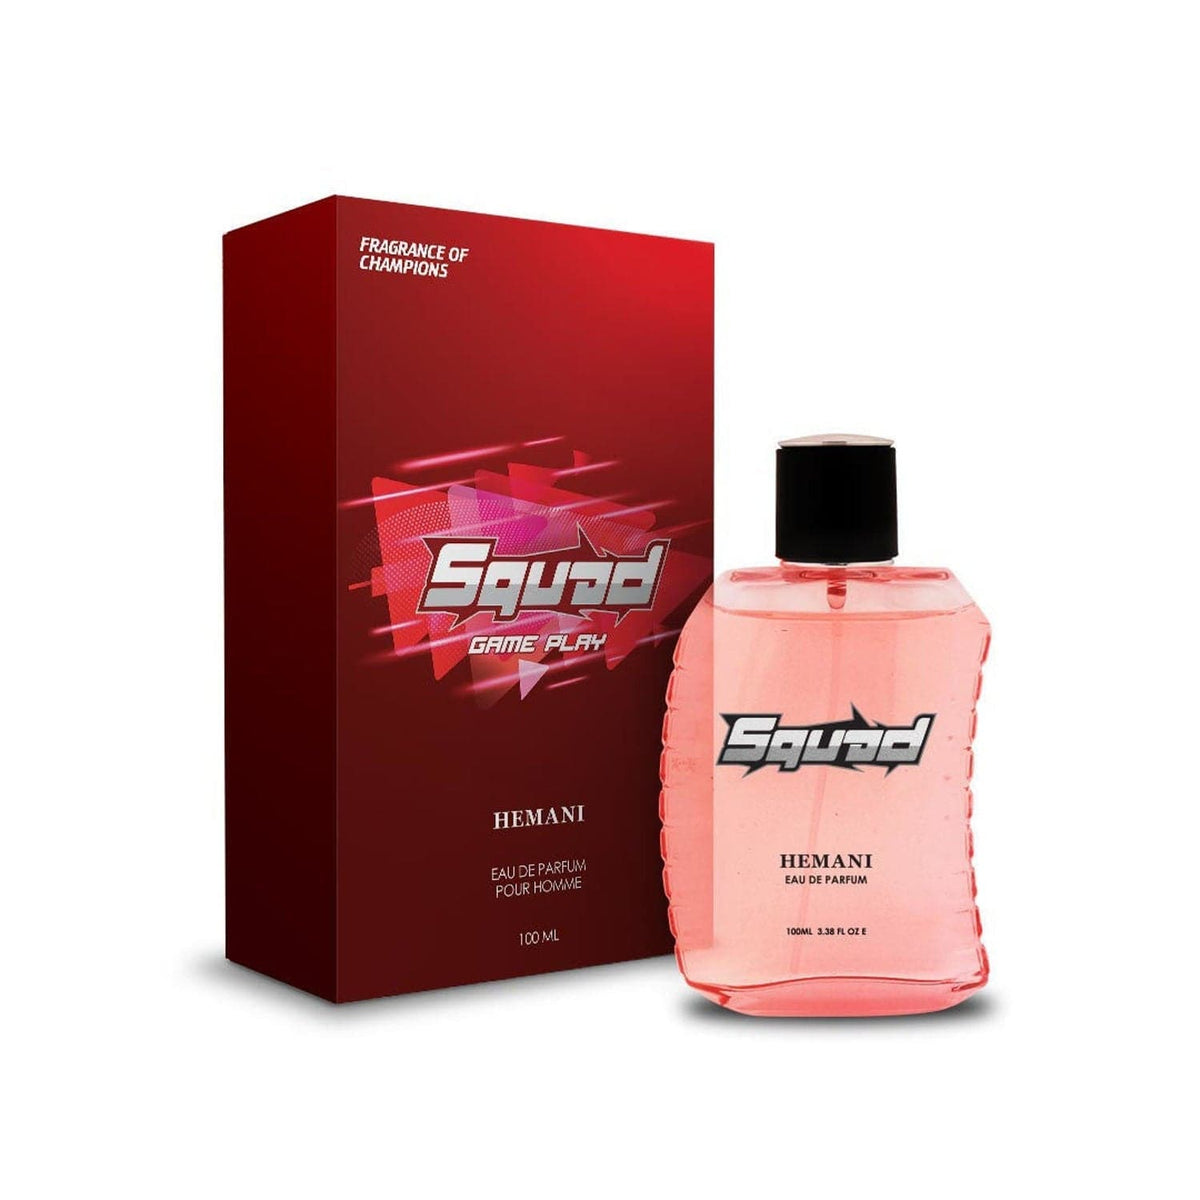 Hemani Squad Perfume Gameplay For Men - Premium  from Hemani - Just Rs 1225.00! Shop now at Cozmetica